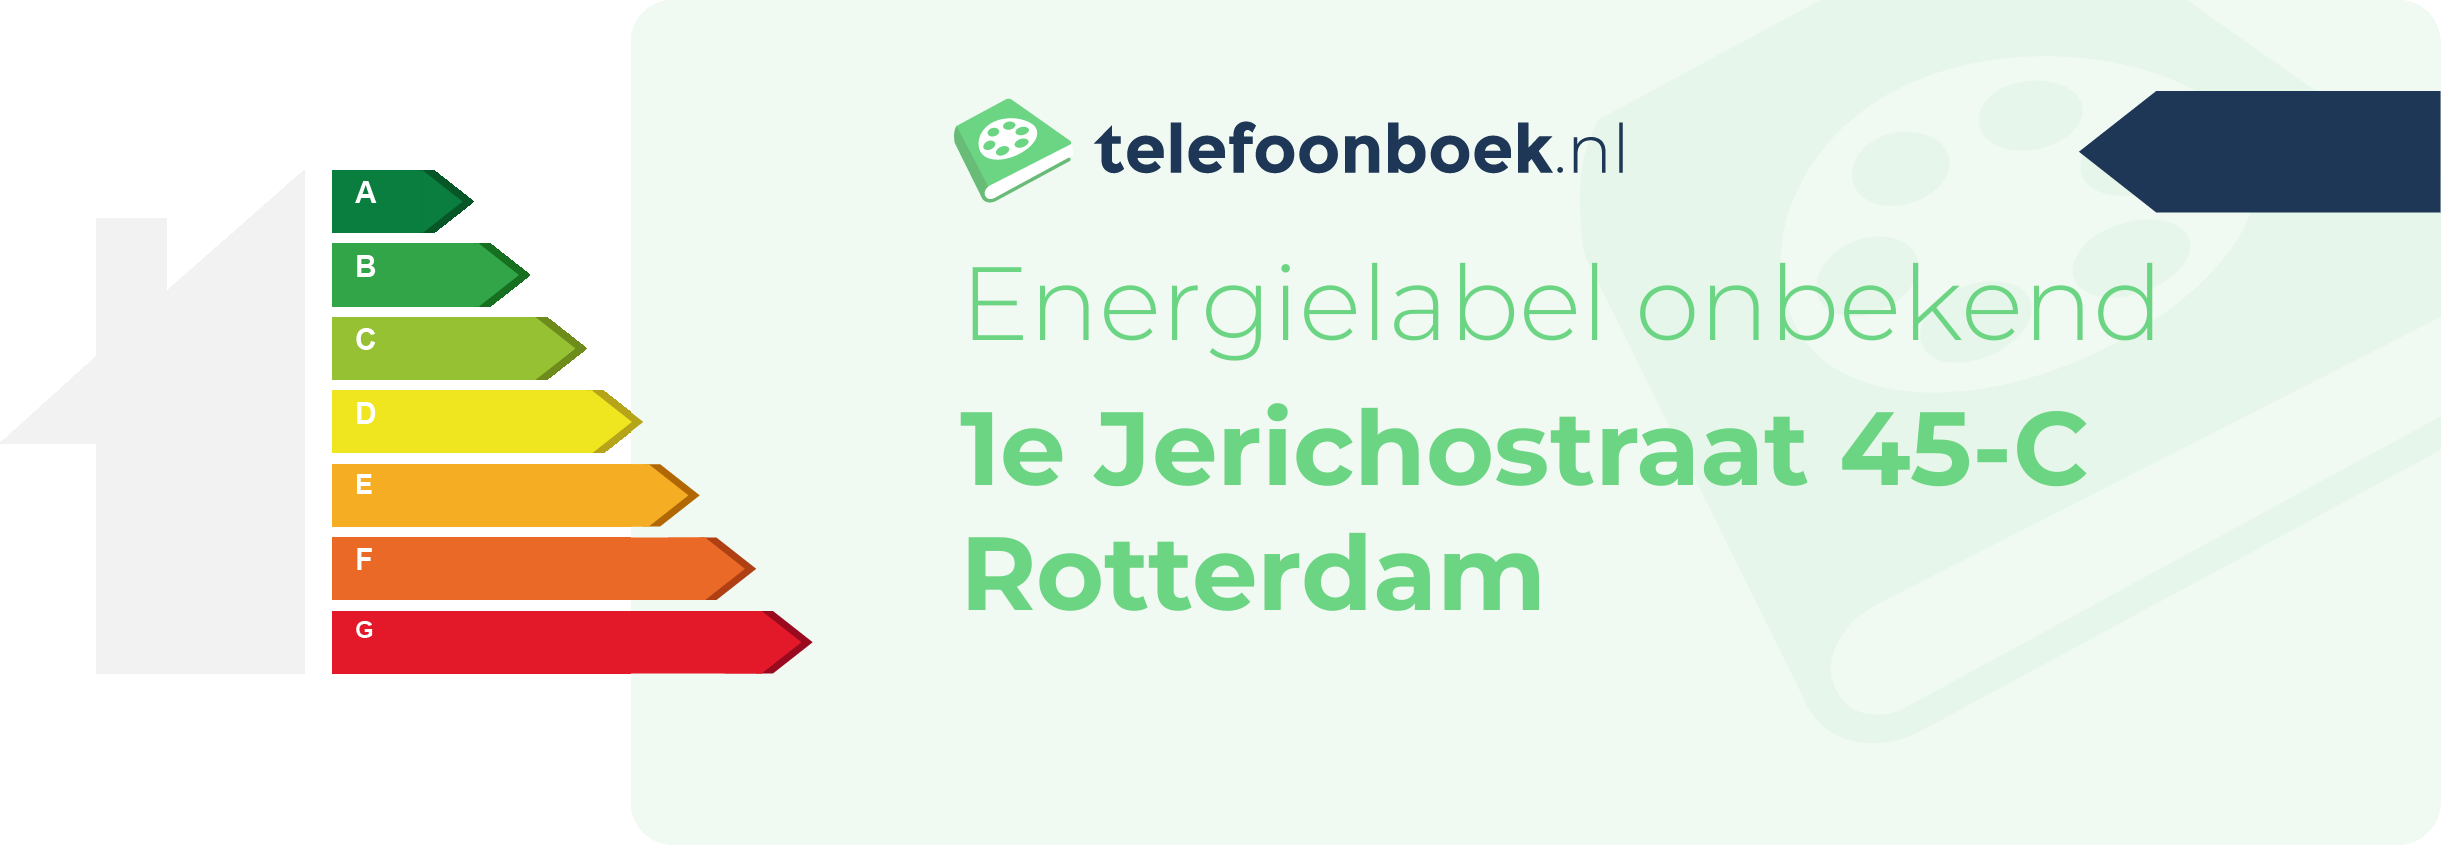 Energielabel 1e Jerichostraat 45-C Rotterdam